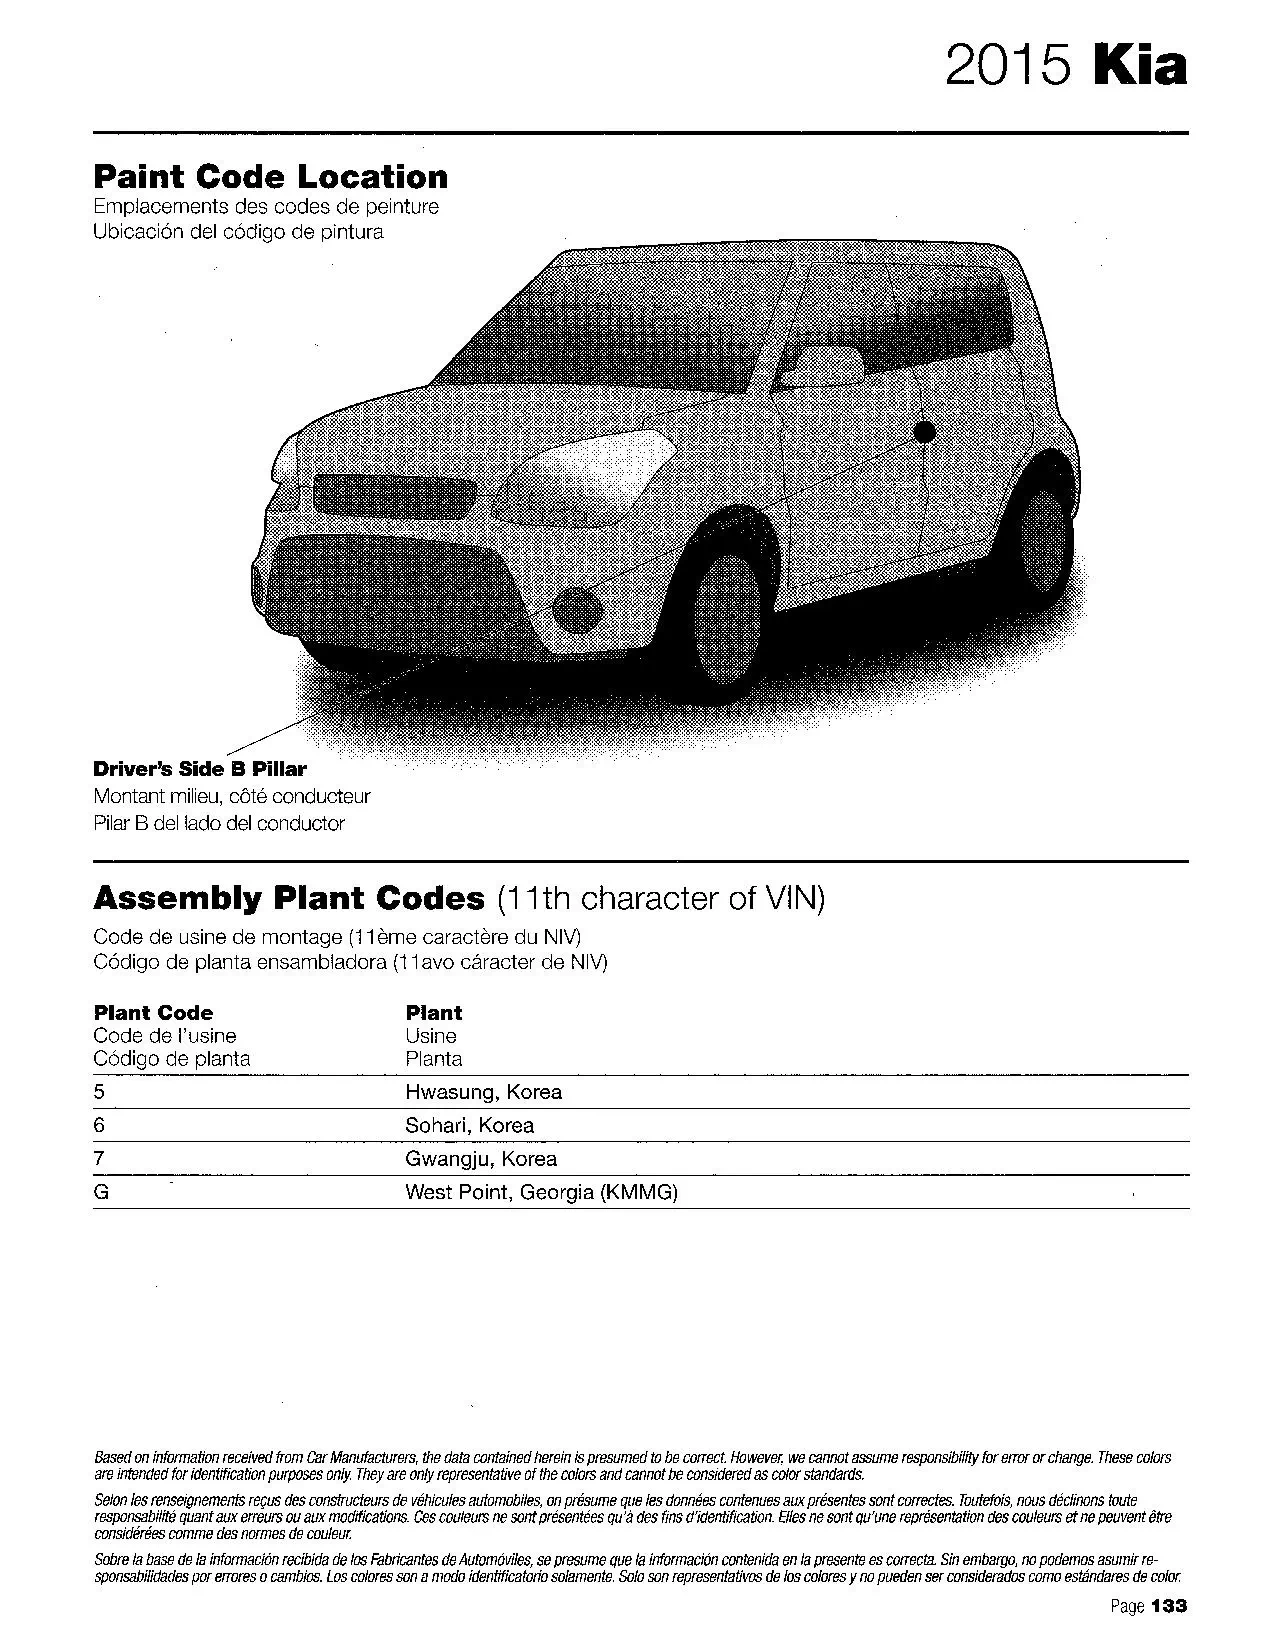 2015 Kia Vehicle Paint Code Location Guide